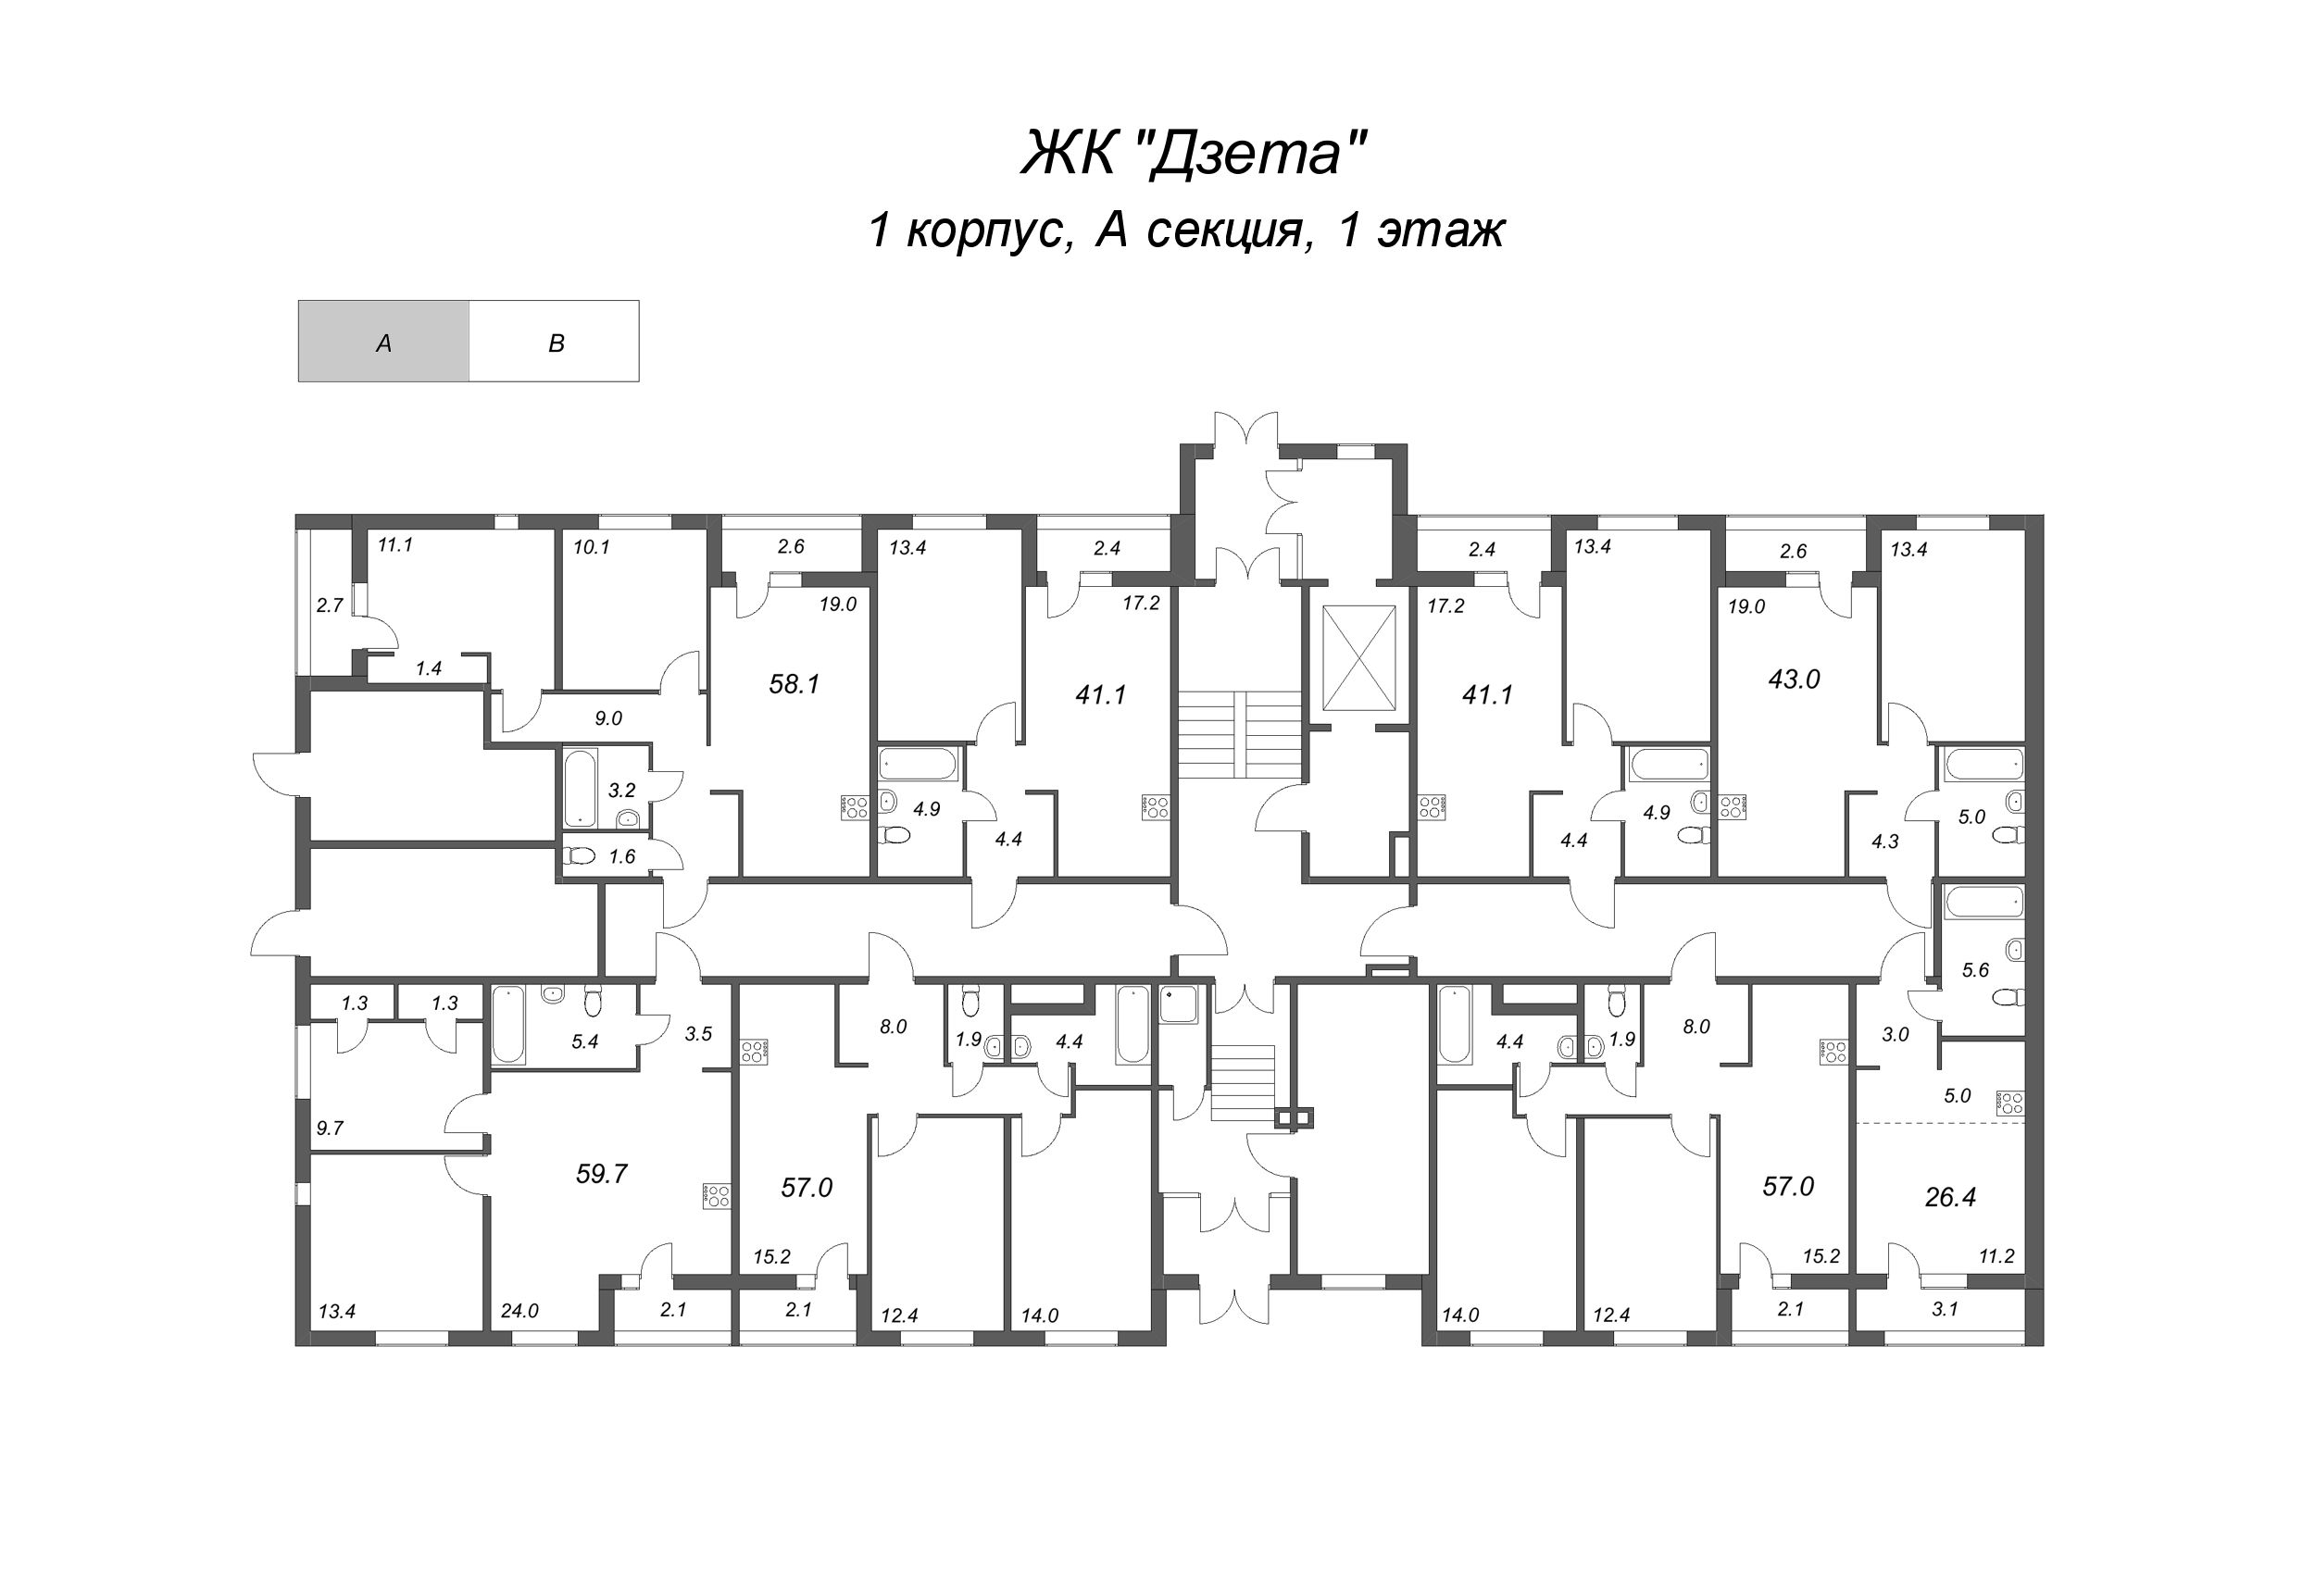 2-комнатная (Евро) квартира, 41.1 м² - планировка этажа